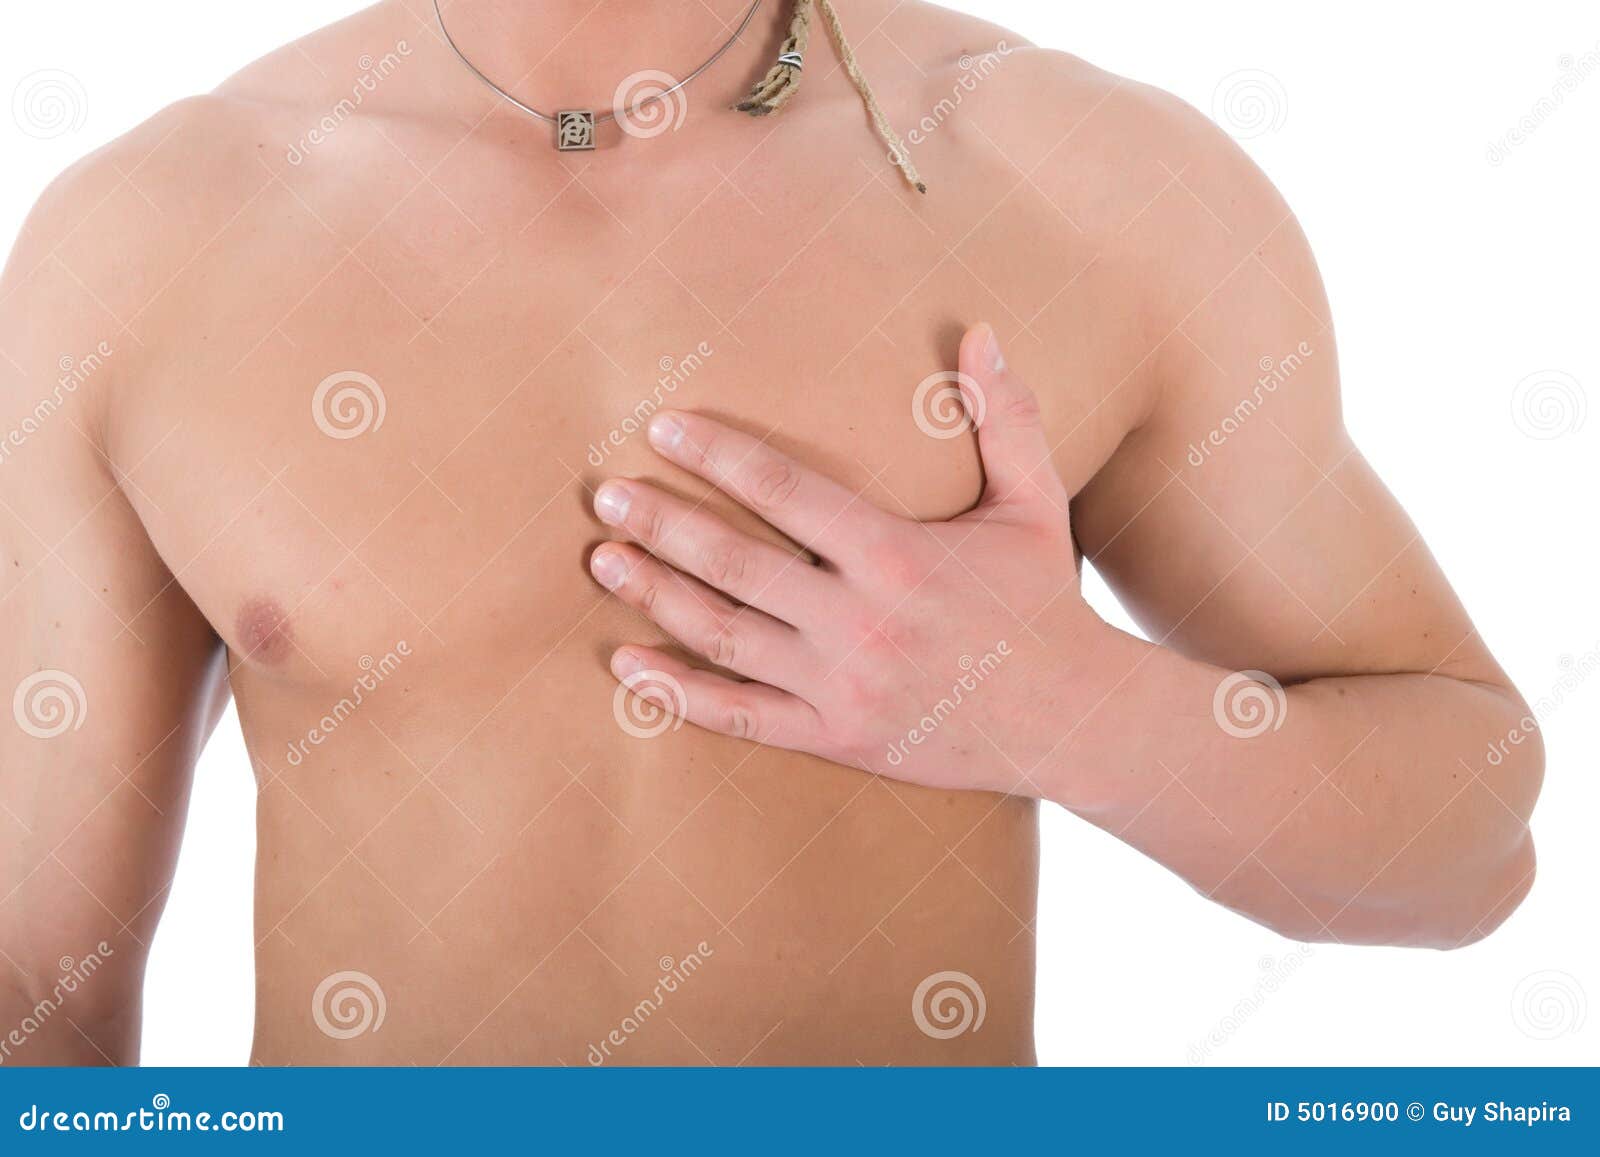 шишка в районе груди у мужчин фото 18